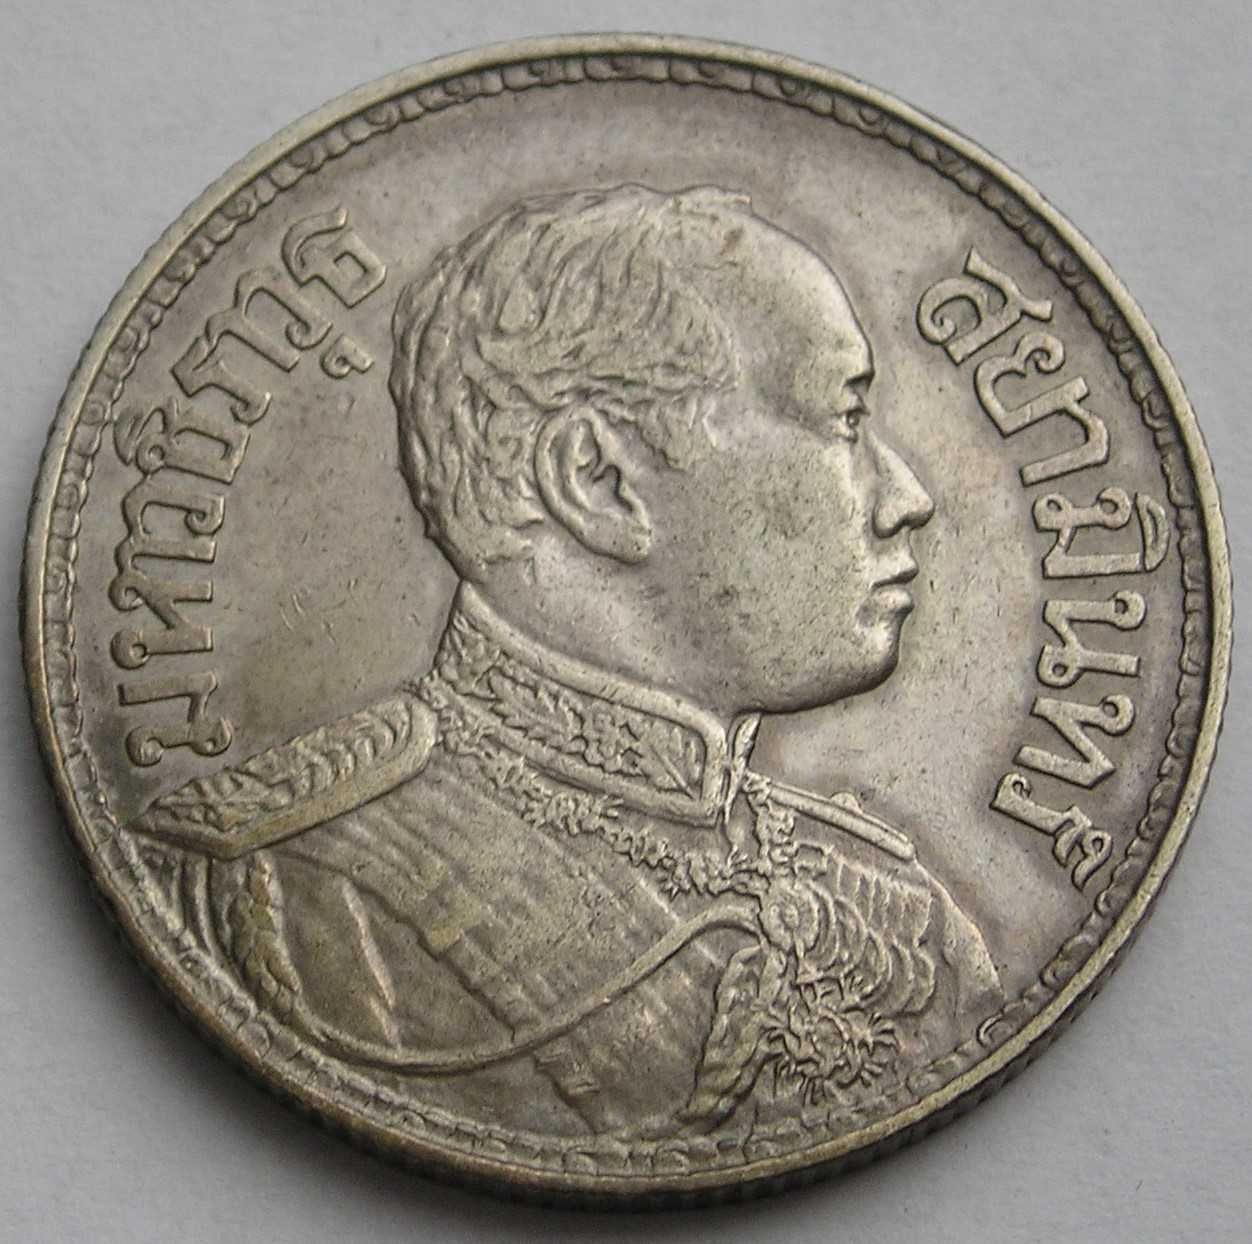 Tajlandia 1 baht bat 1917 - król Rama VI - srebro